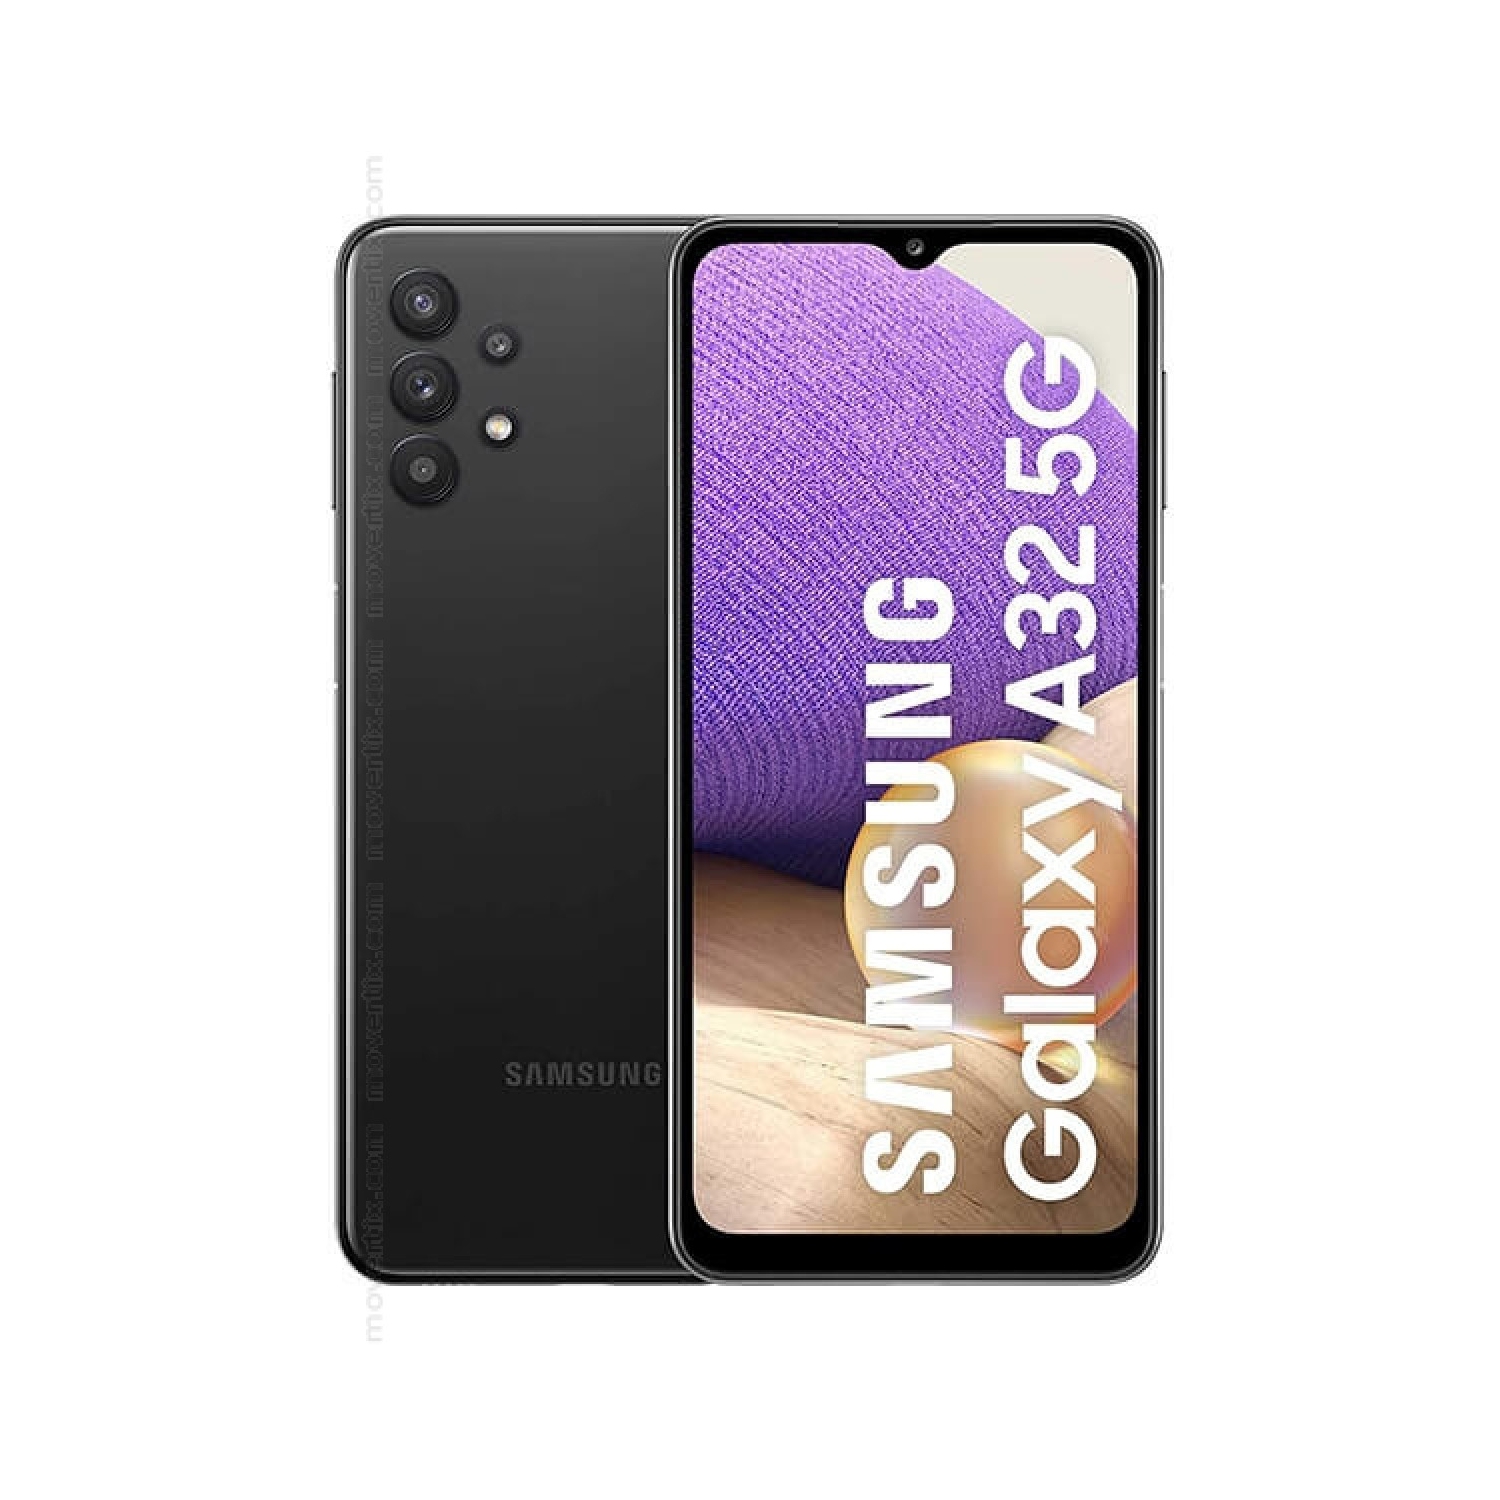 Refurbished (Excellent) - Samsung Galaxy A32 64GB Smartphone Black Unlocked Certified Refurbished